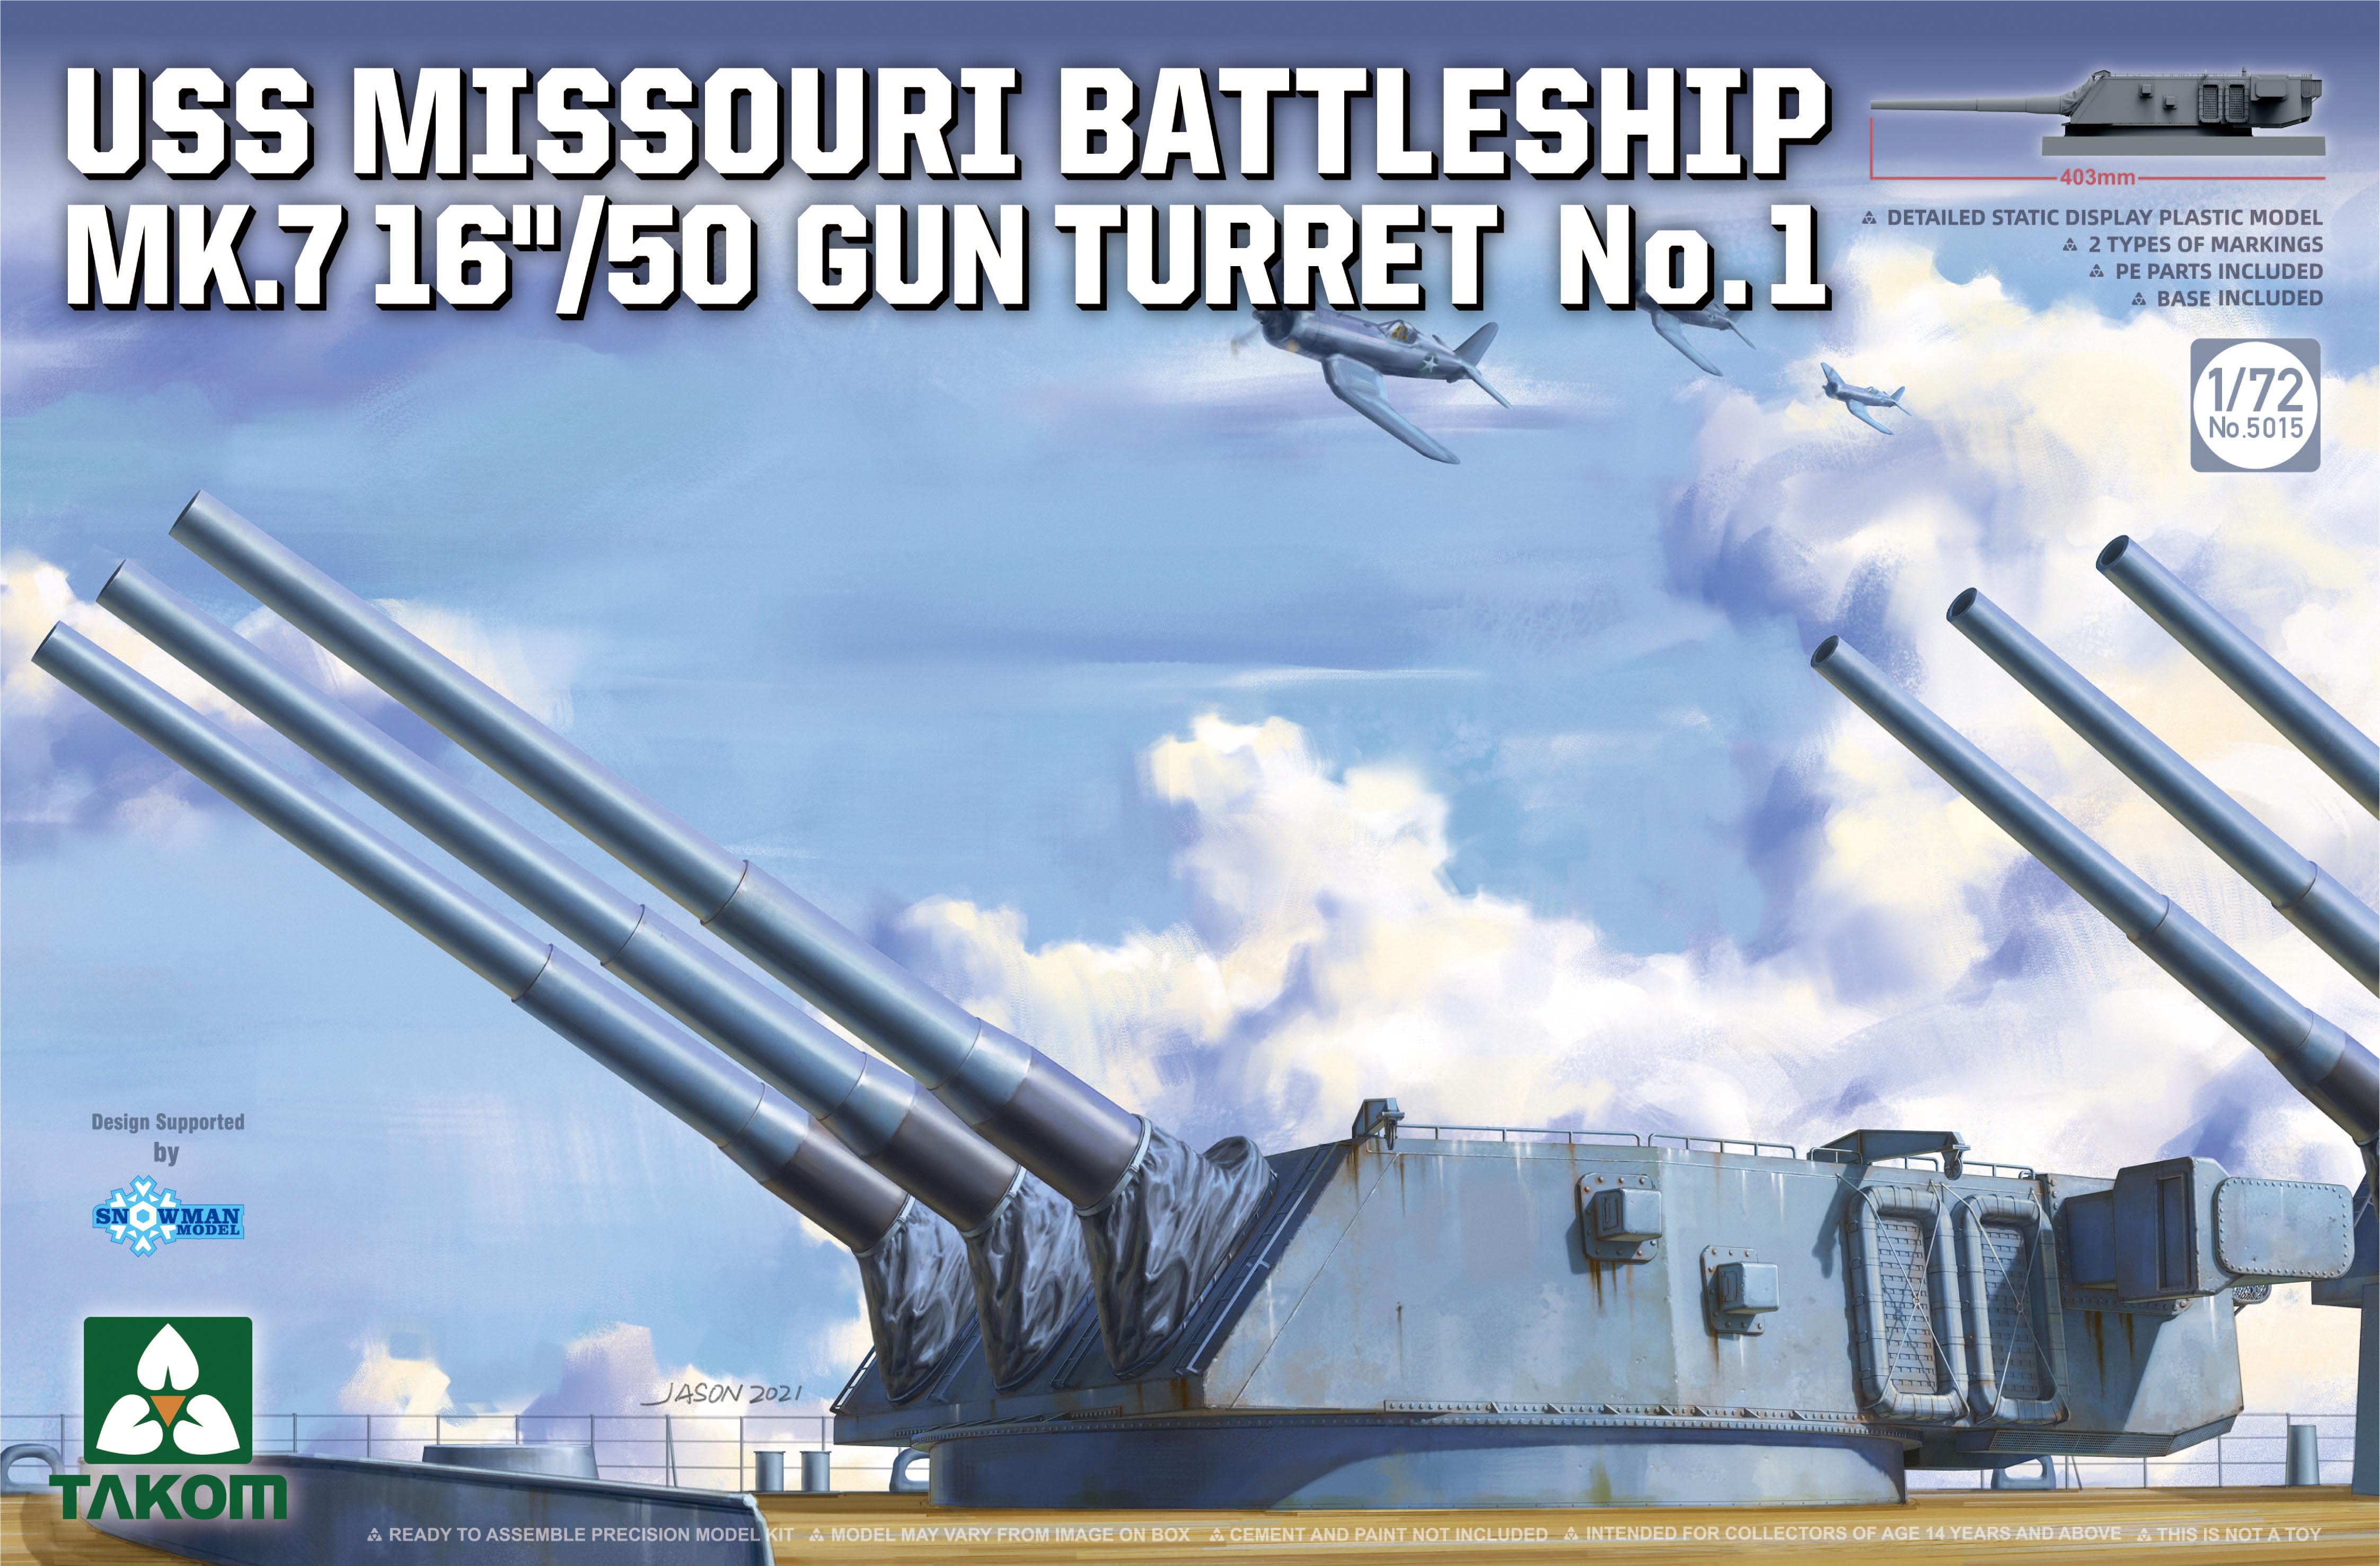 5015  техника и вооружение  USS Missouri Battleship Mk.7 16"/50 Gun Turret No. 1  (1:72)